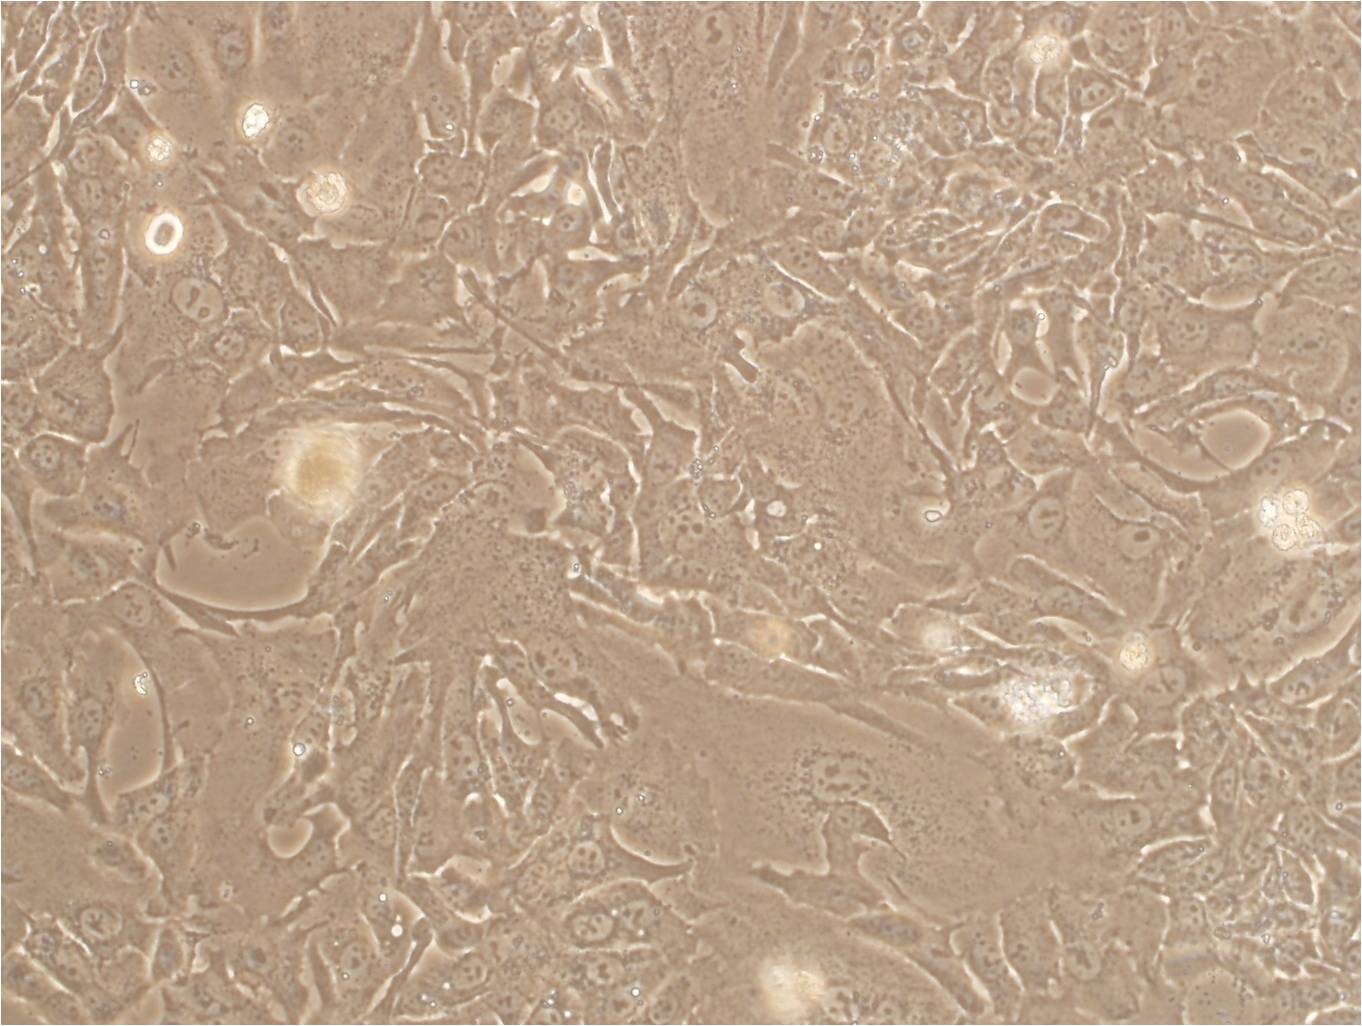 B95-8 cell line绒猴EBV转化的白细胞系,B95-8 cell line